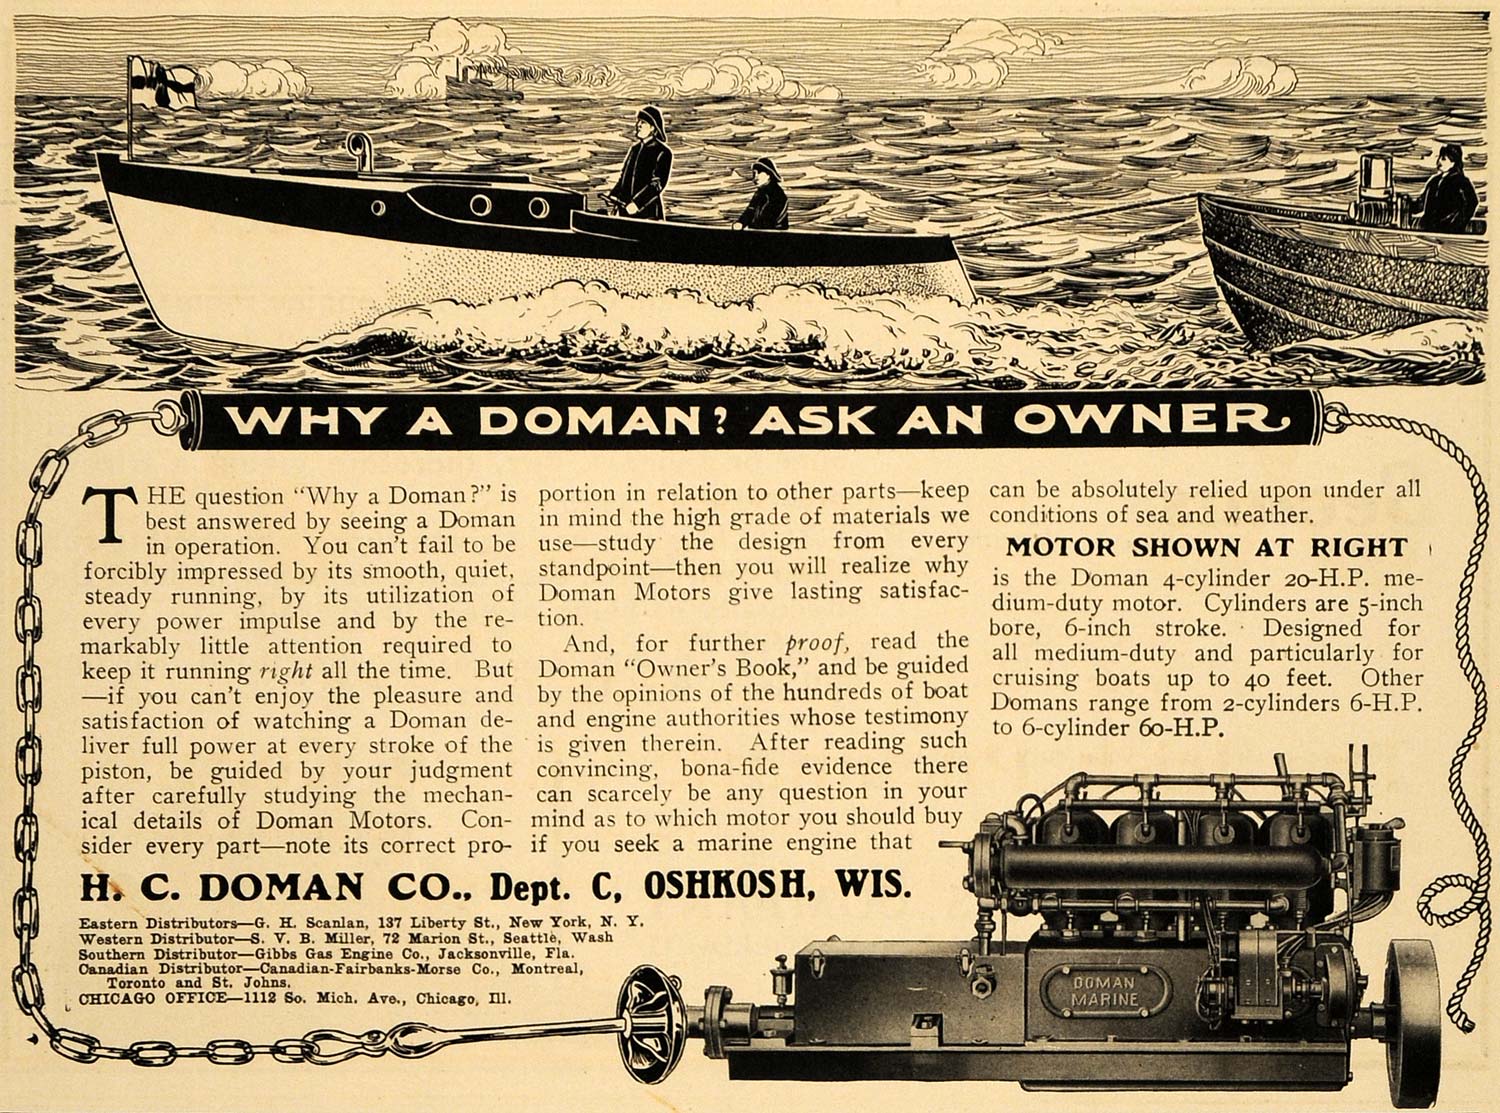 1913 Ad H. C. Doman Boat Engines Oshkosh Wisconsin - ORIGINAL ADVERTISING MB2